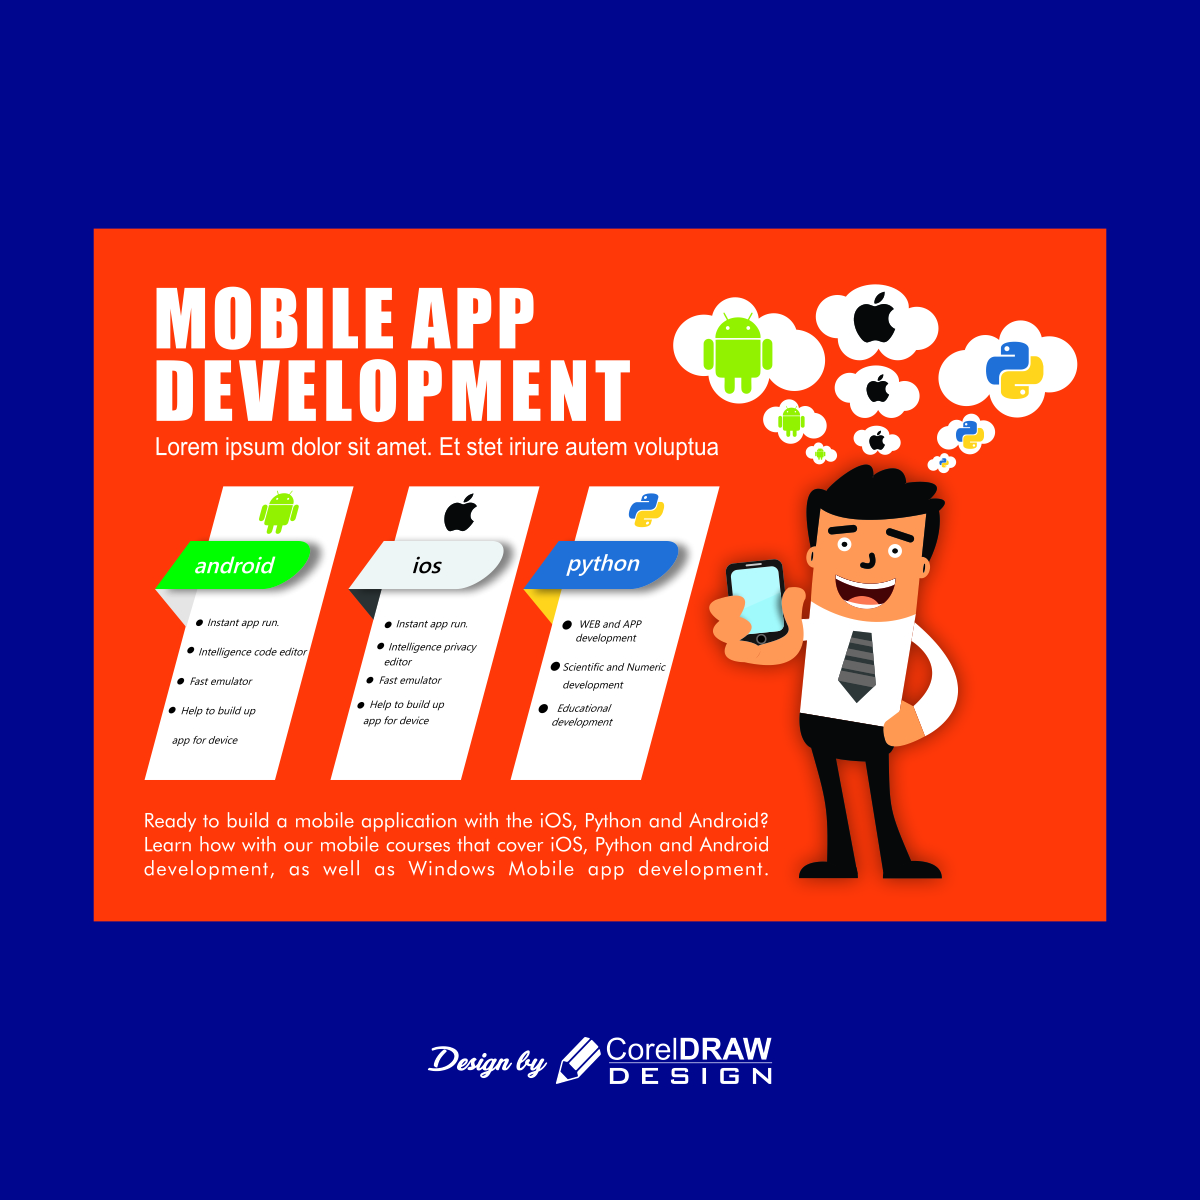 Mobile App Development Promotion Poster Banner